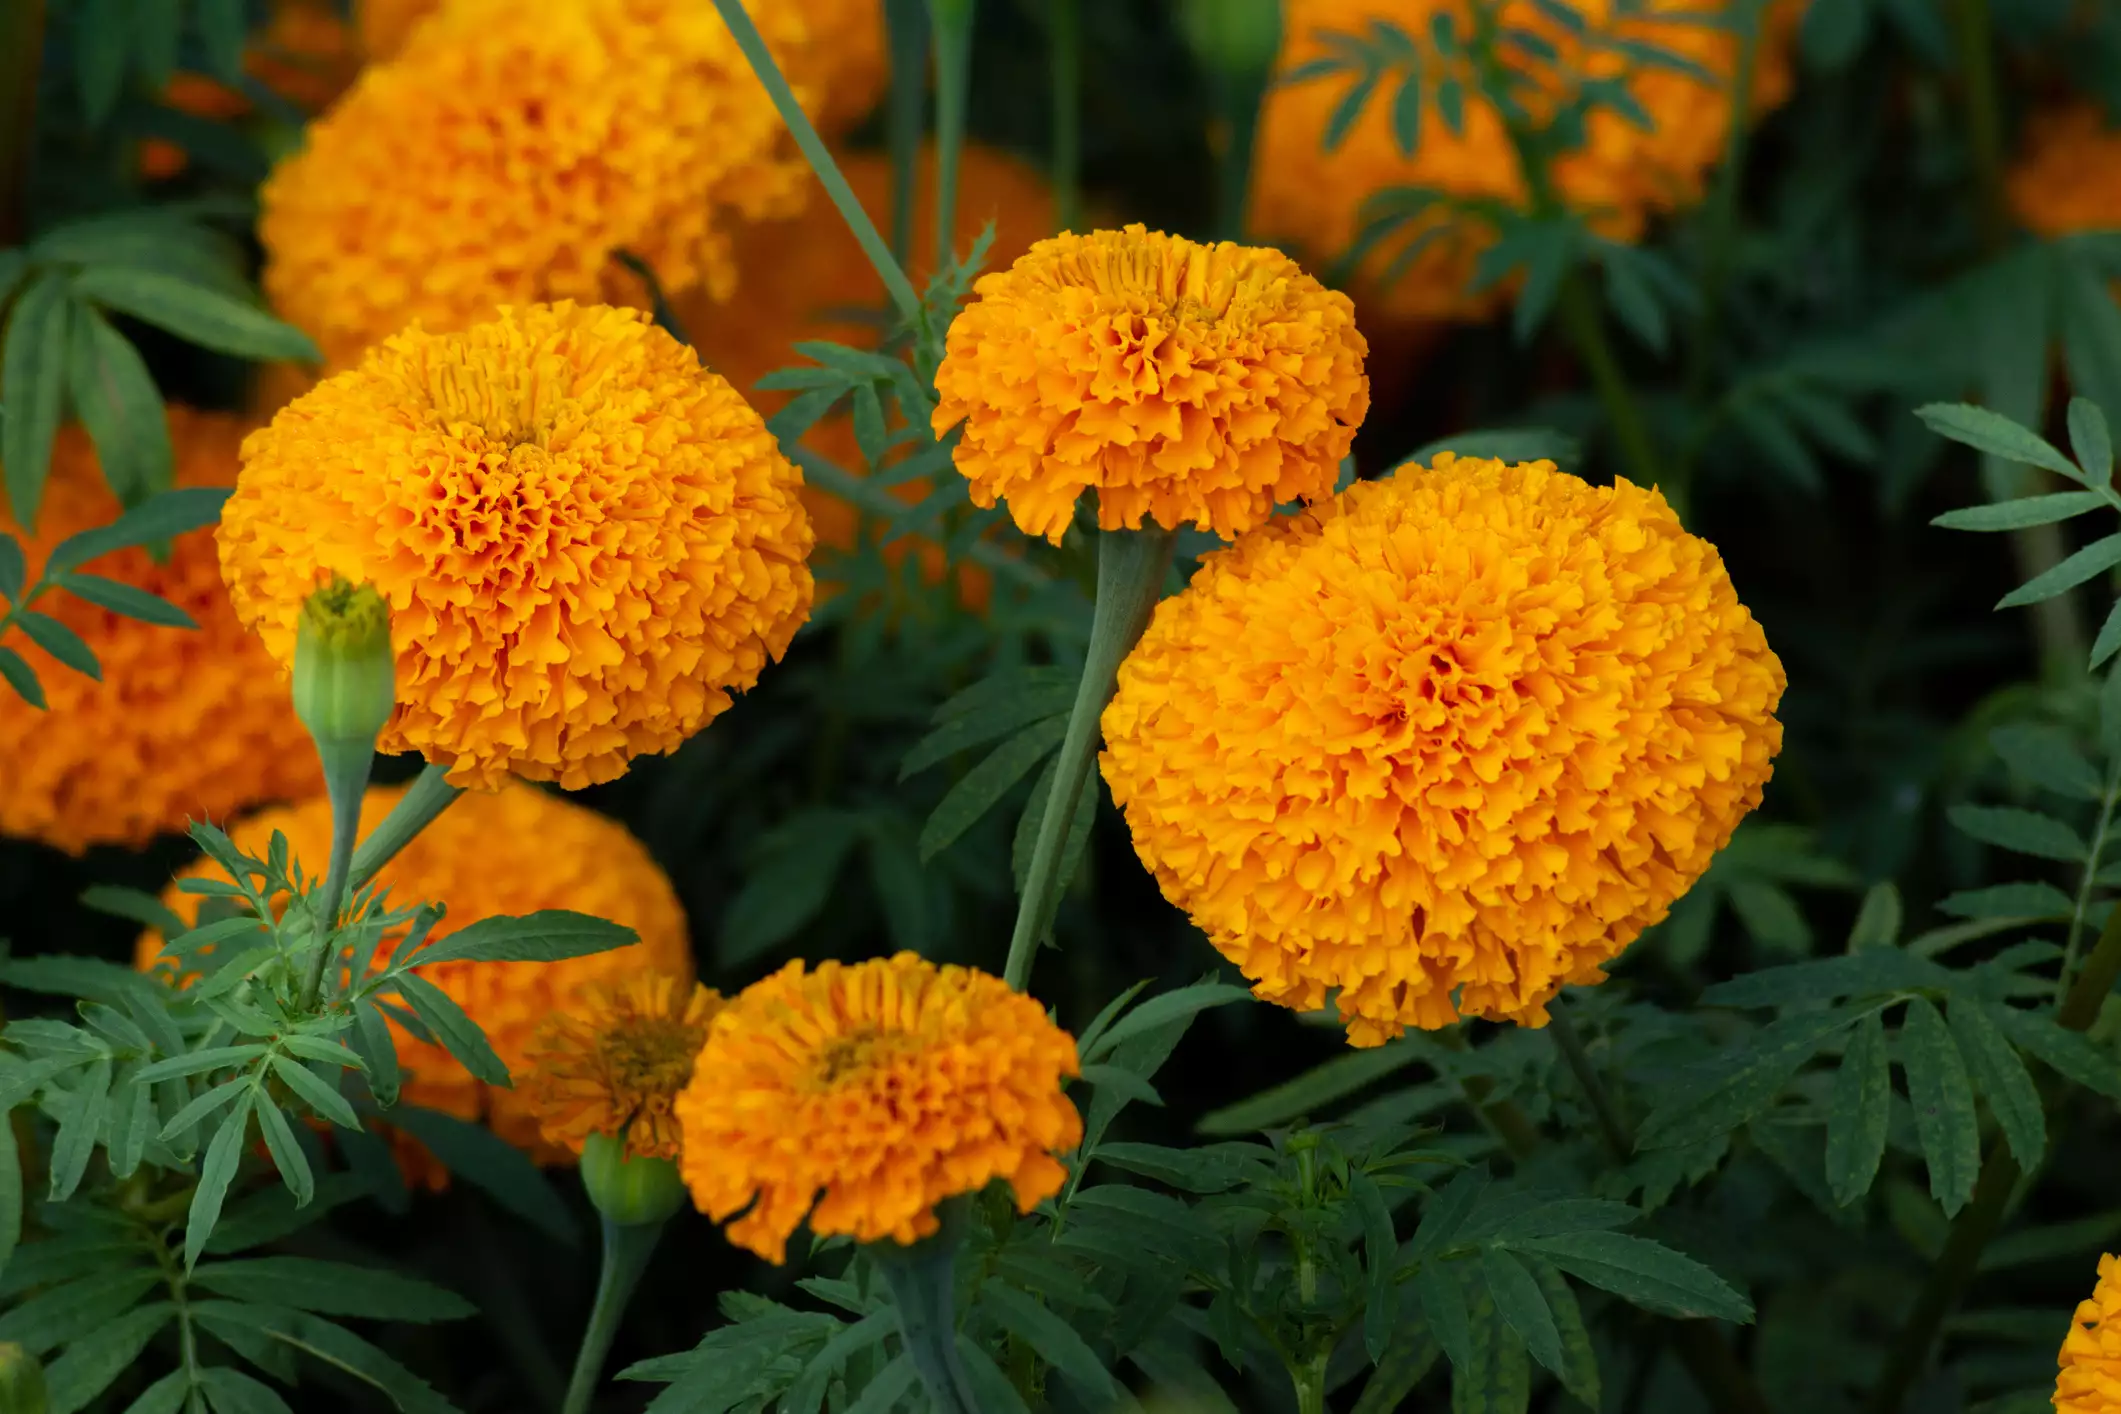 Pom-pomlike orange marigold blooms in a garden